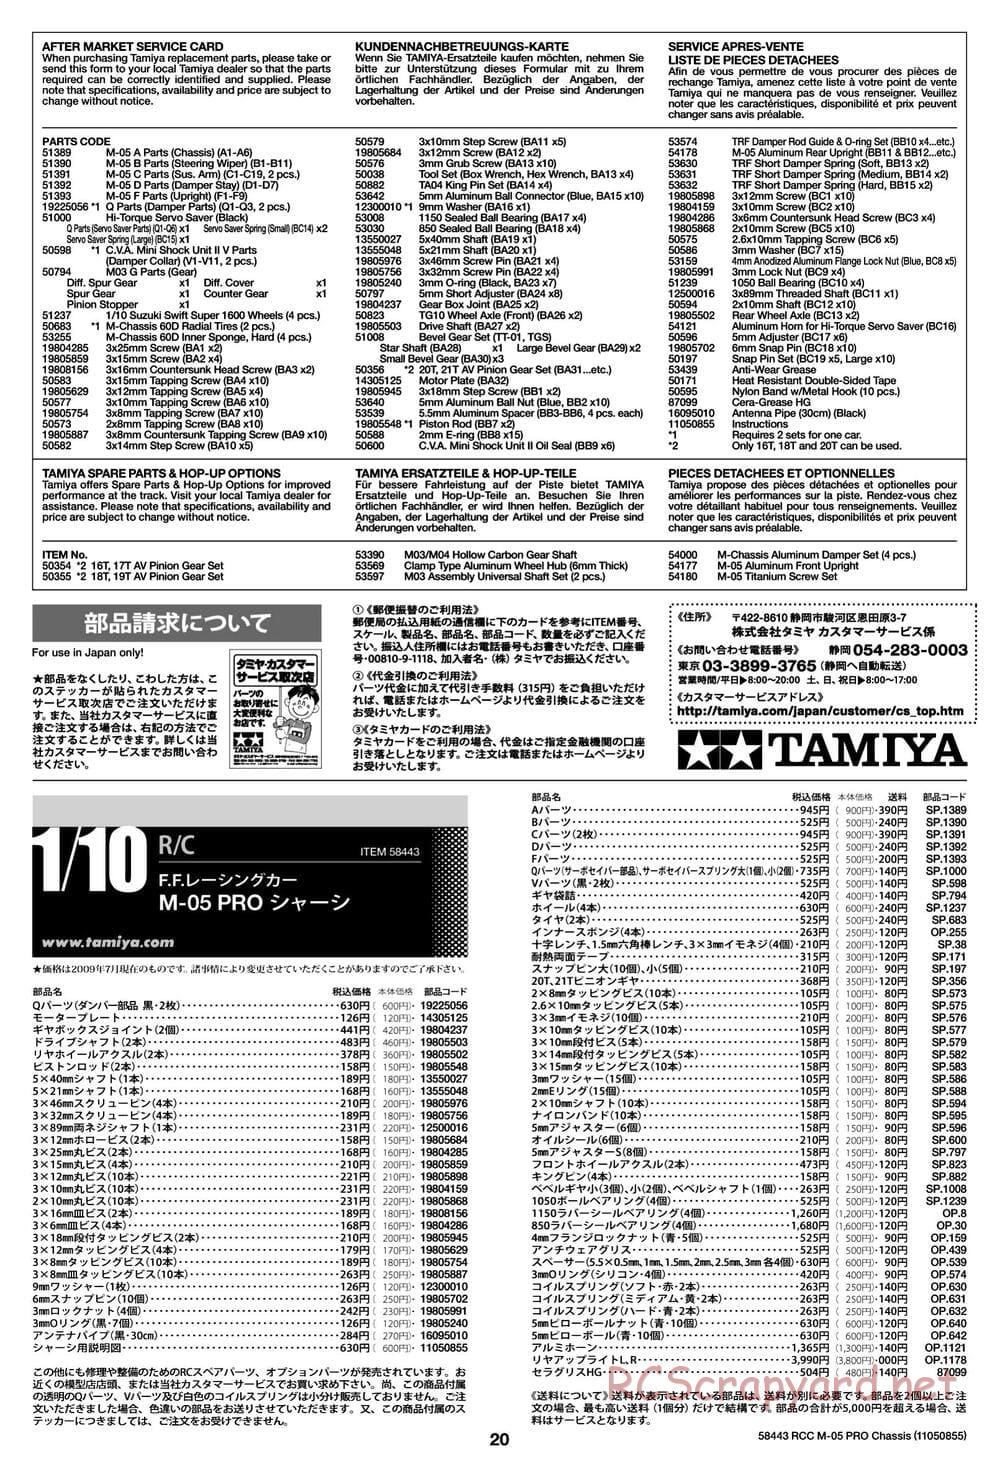 Tamiya - M05-Pro Chassis - Manual - Page 20